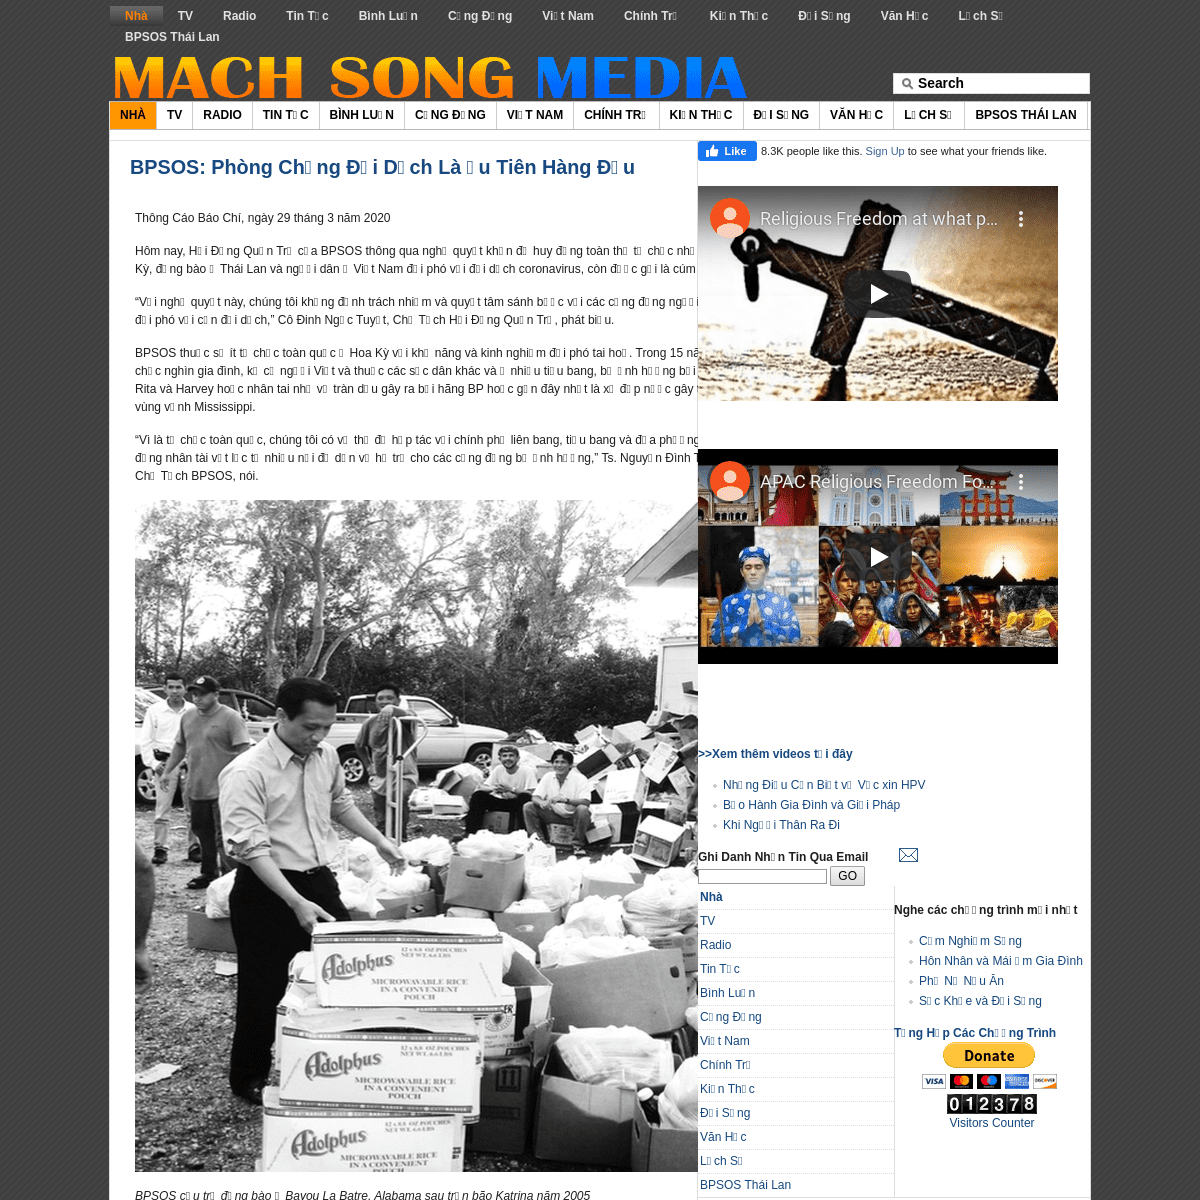 A complete backup of machsongmedia.com